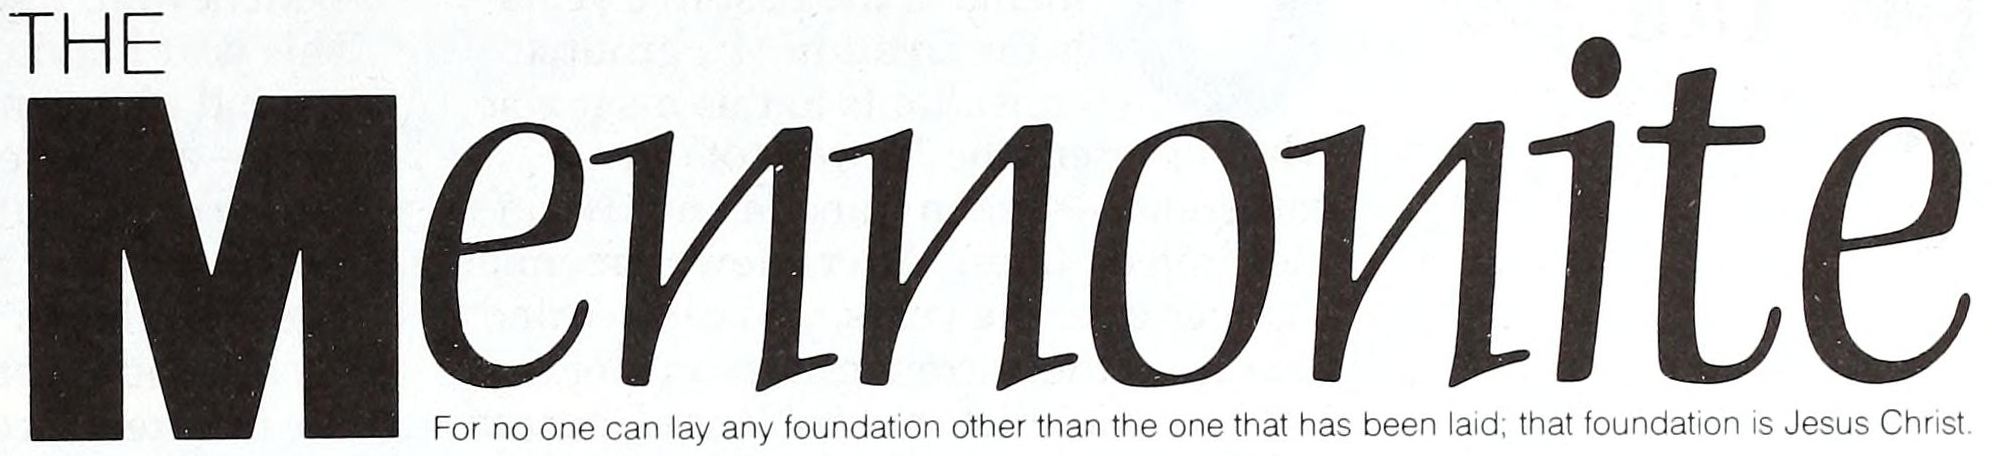 “The Mennonite” logo, circa 1991